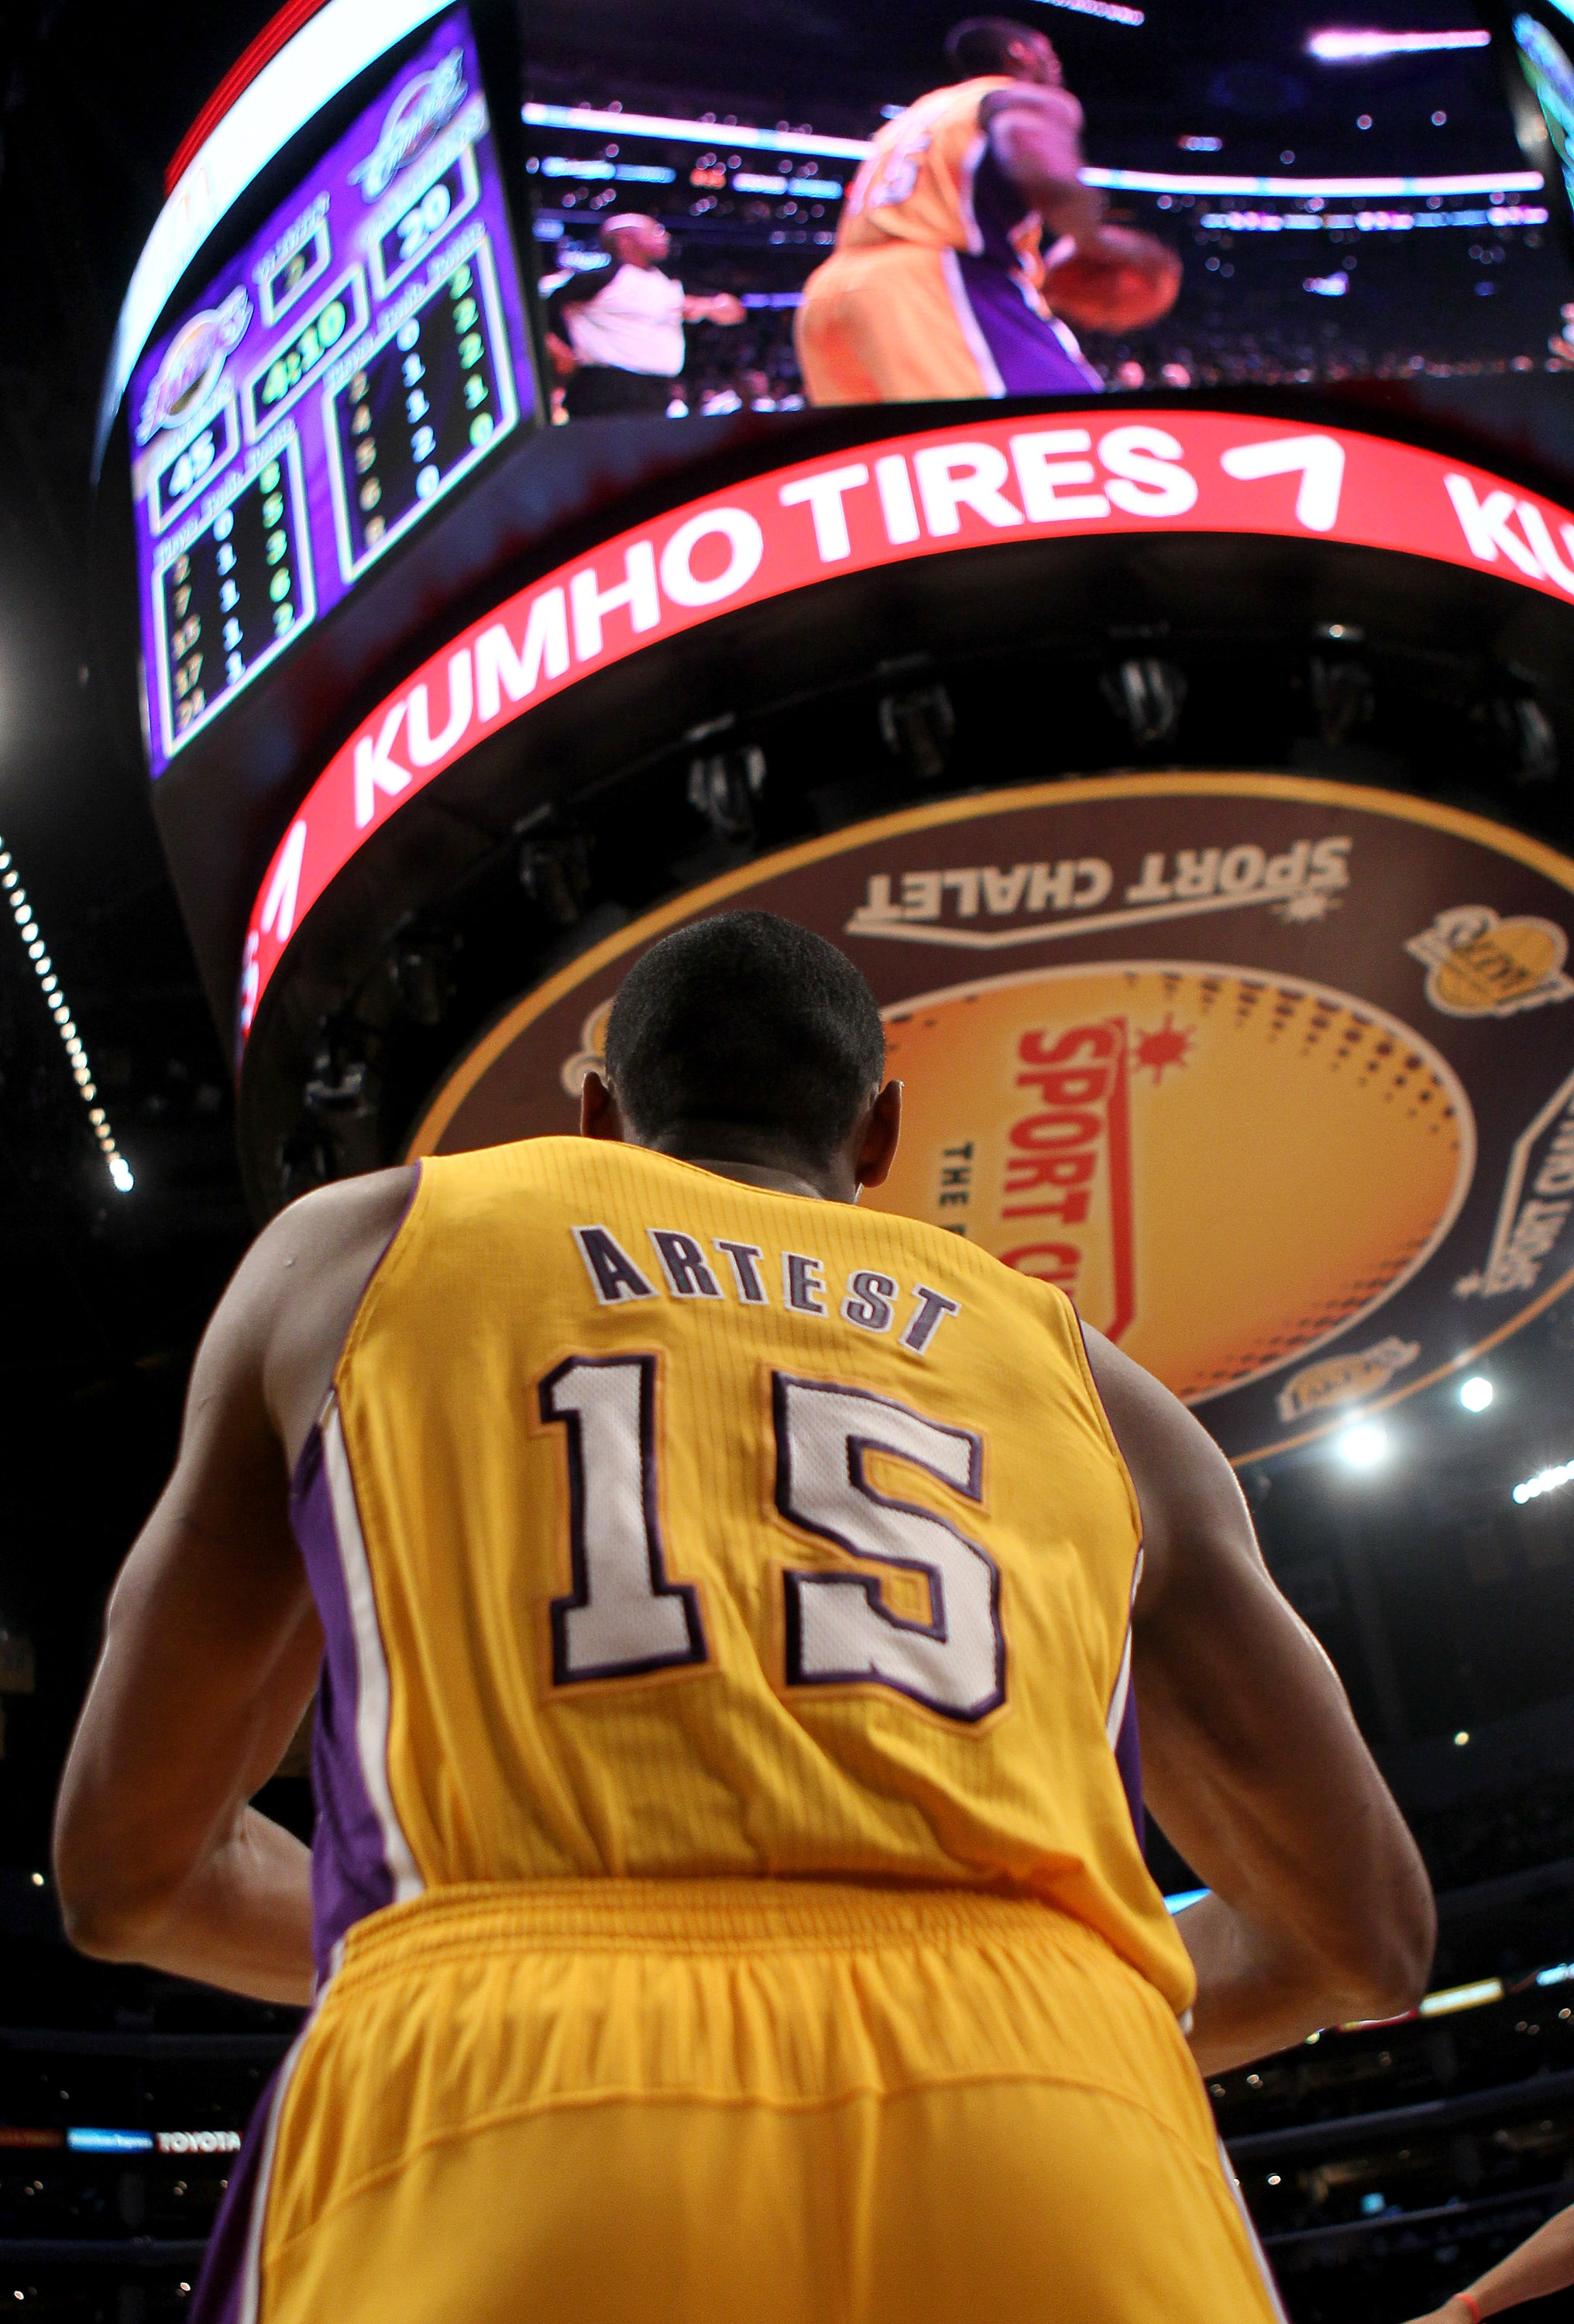 NBA Trade Rumors: 10 Reasons the Lakers Should Send Ron Artest